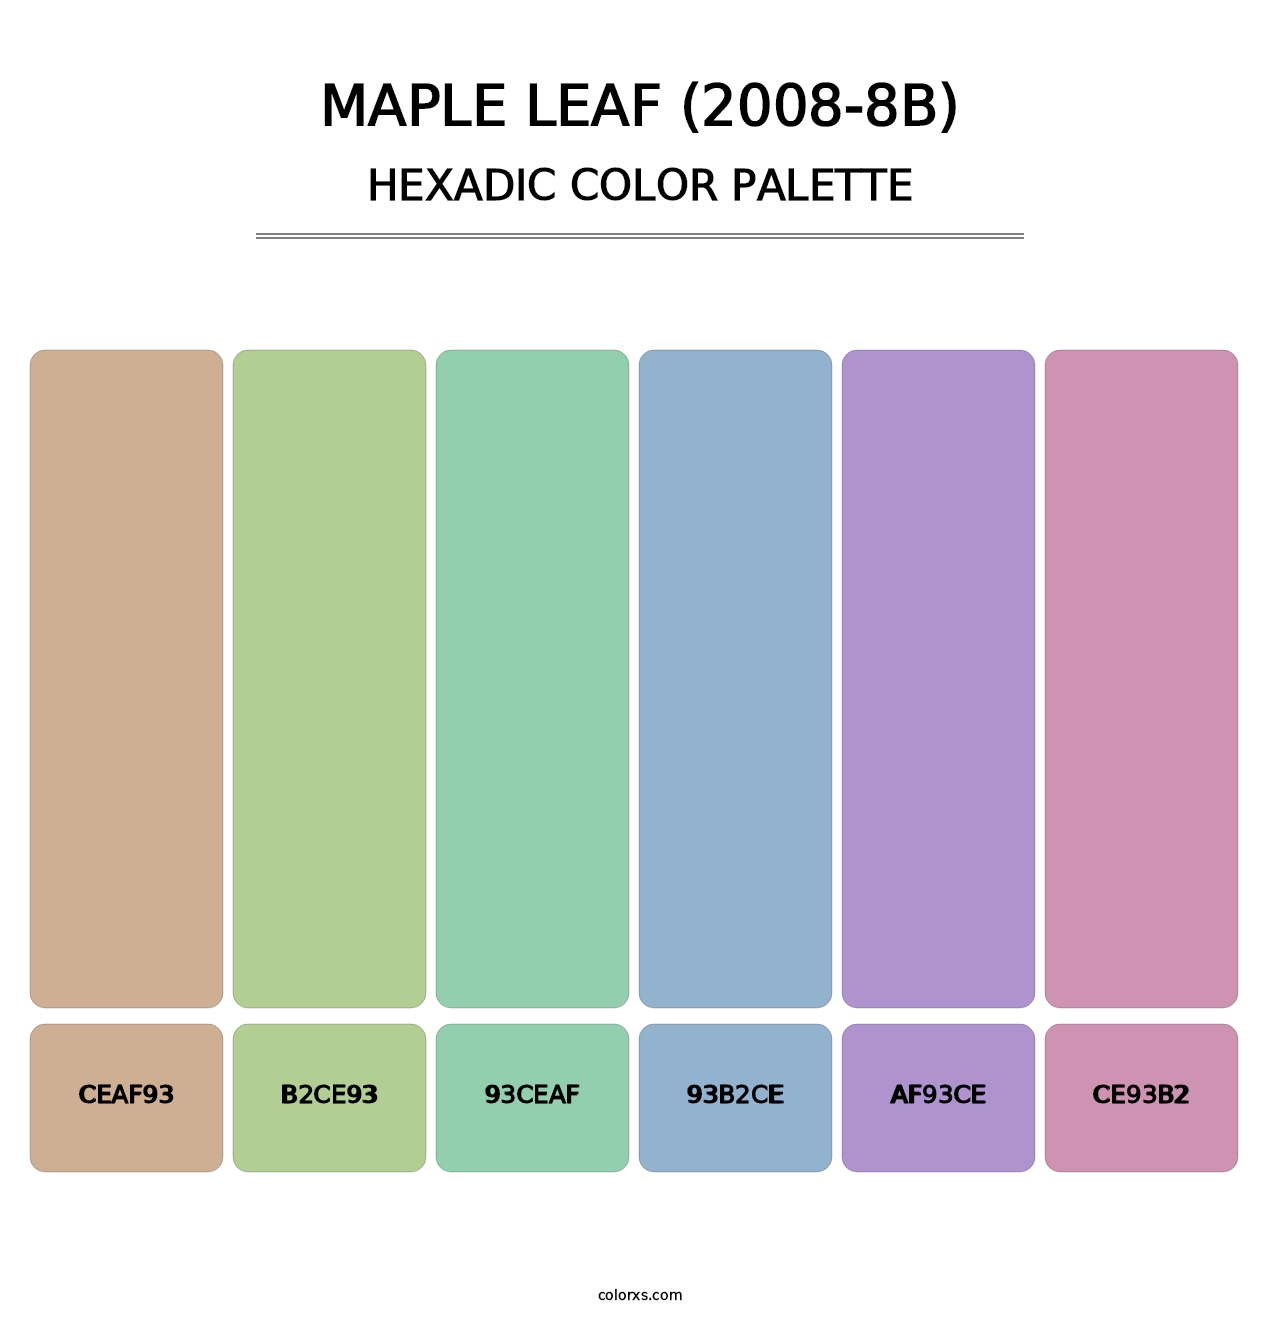 Maple Leaf (2008-8B) - Hexadic Color Palette